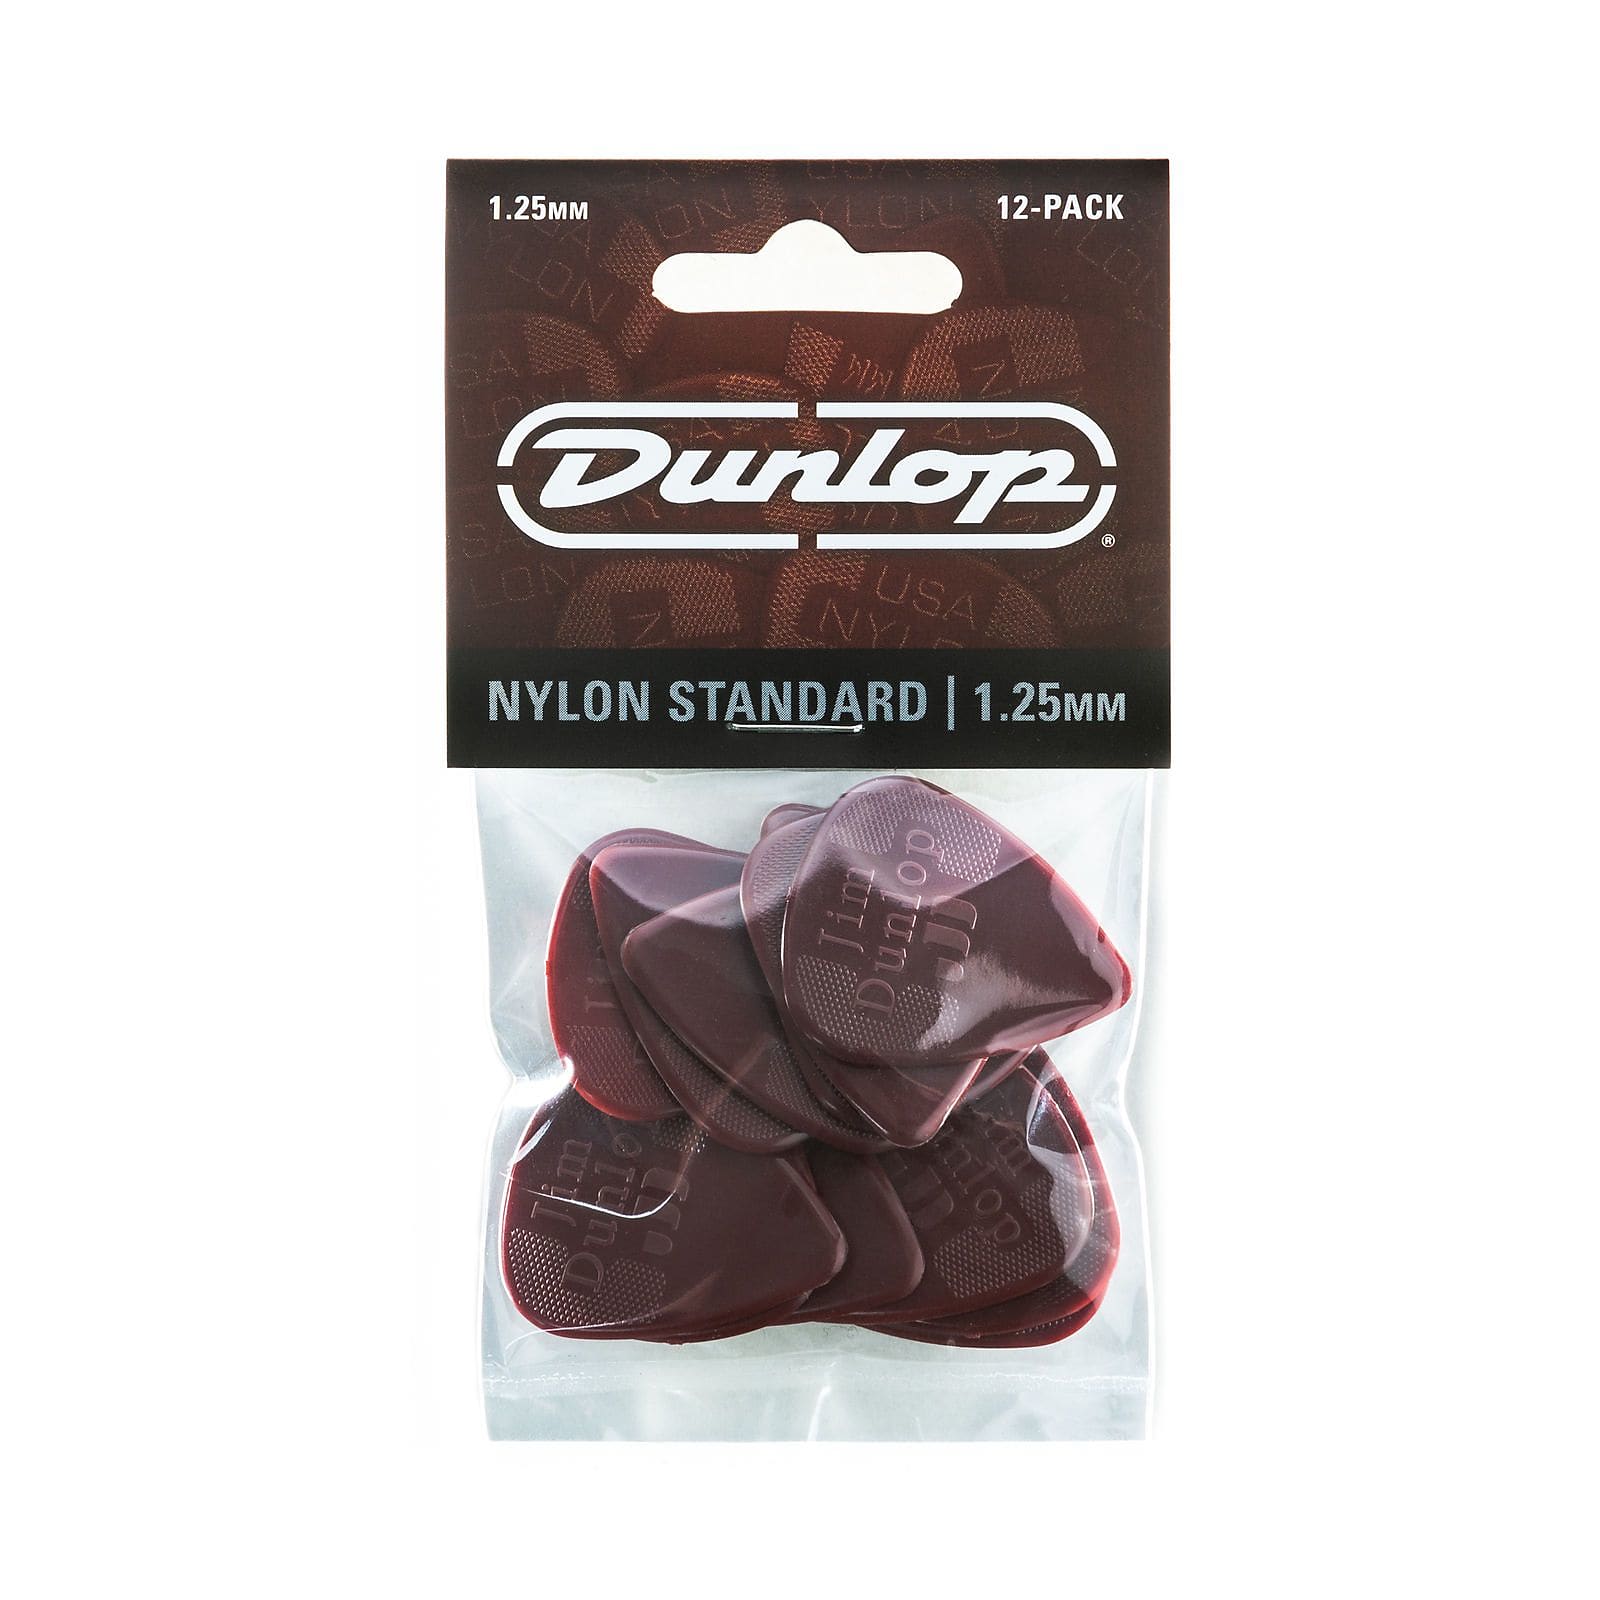 Dunlop 44P1.25 Nylon Standard Picks - 1.25mm Extra Heavy, 12 Pack